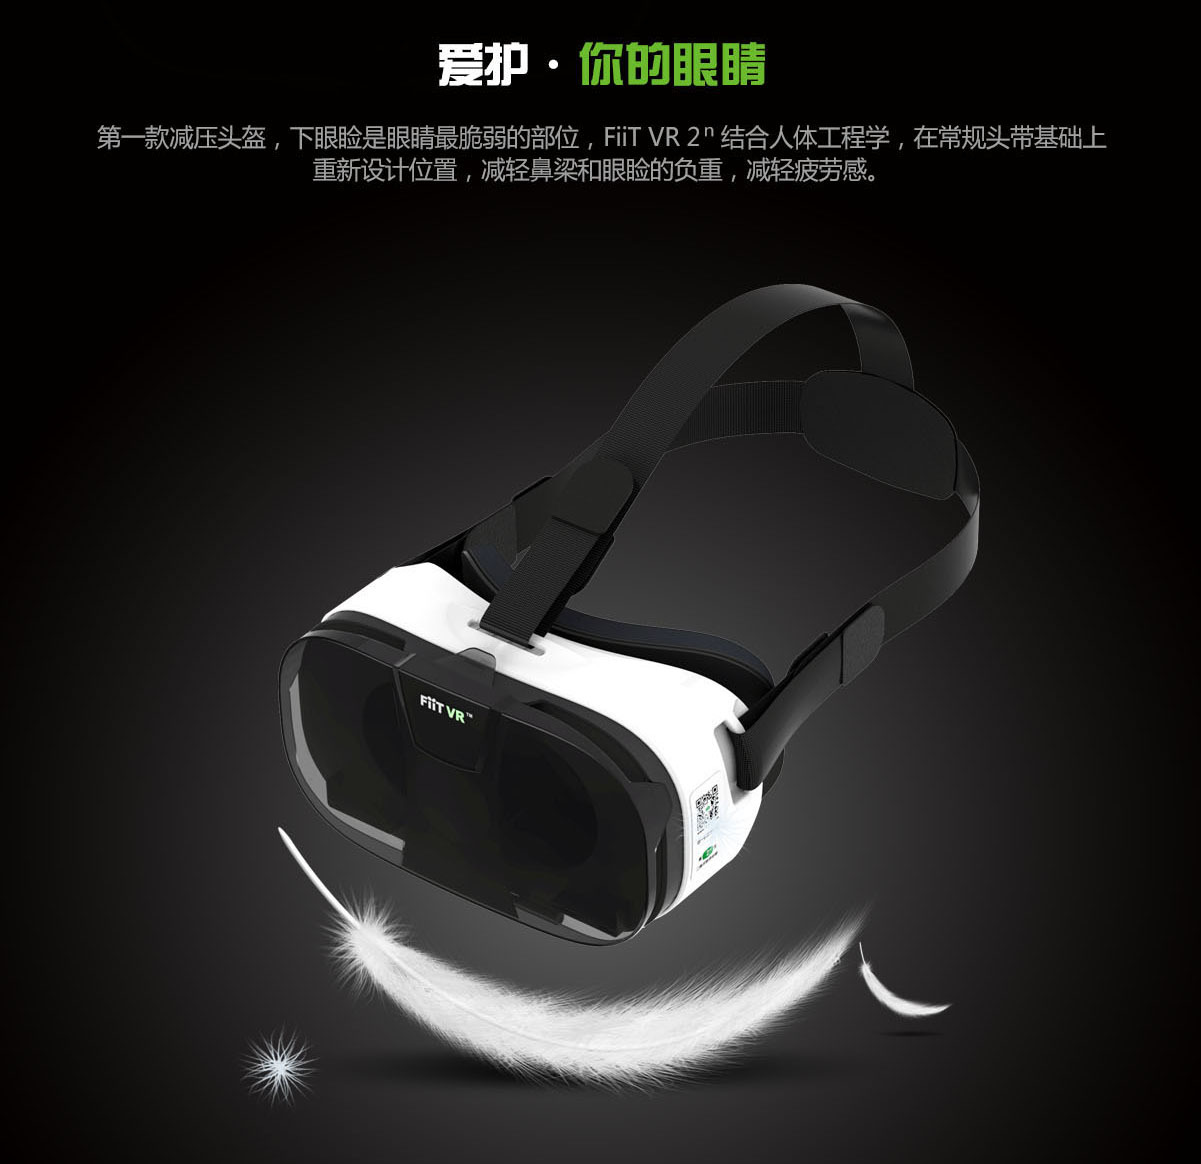 FIIT VR 2N 手机虚拟现实头盔3D VR眼镜 头戴式 3Dglass vrbox